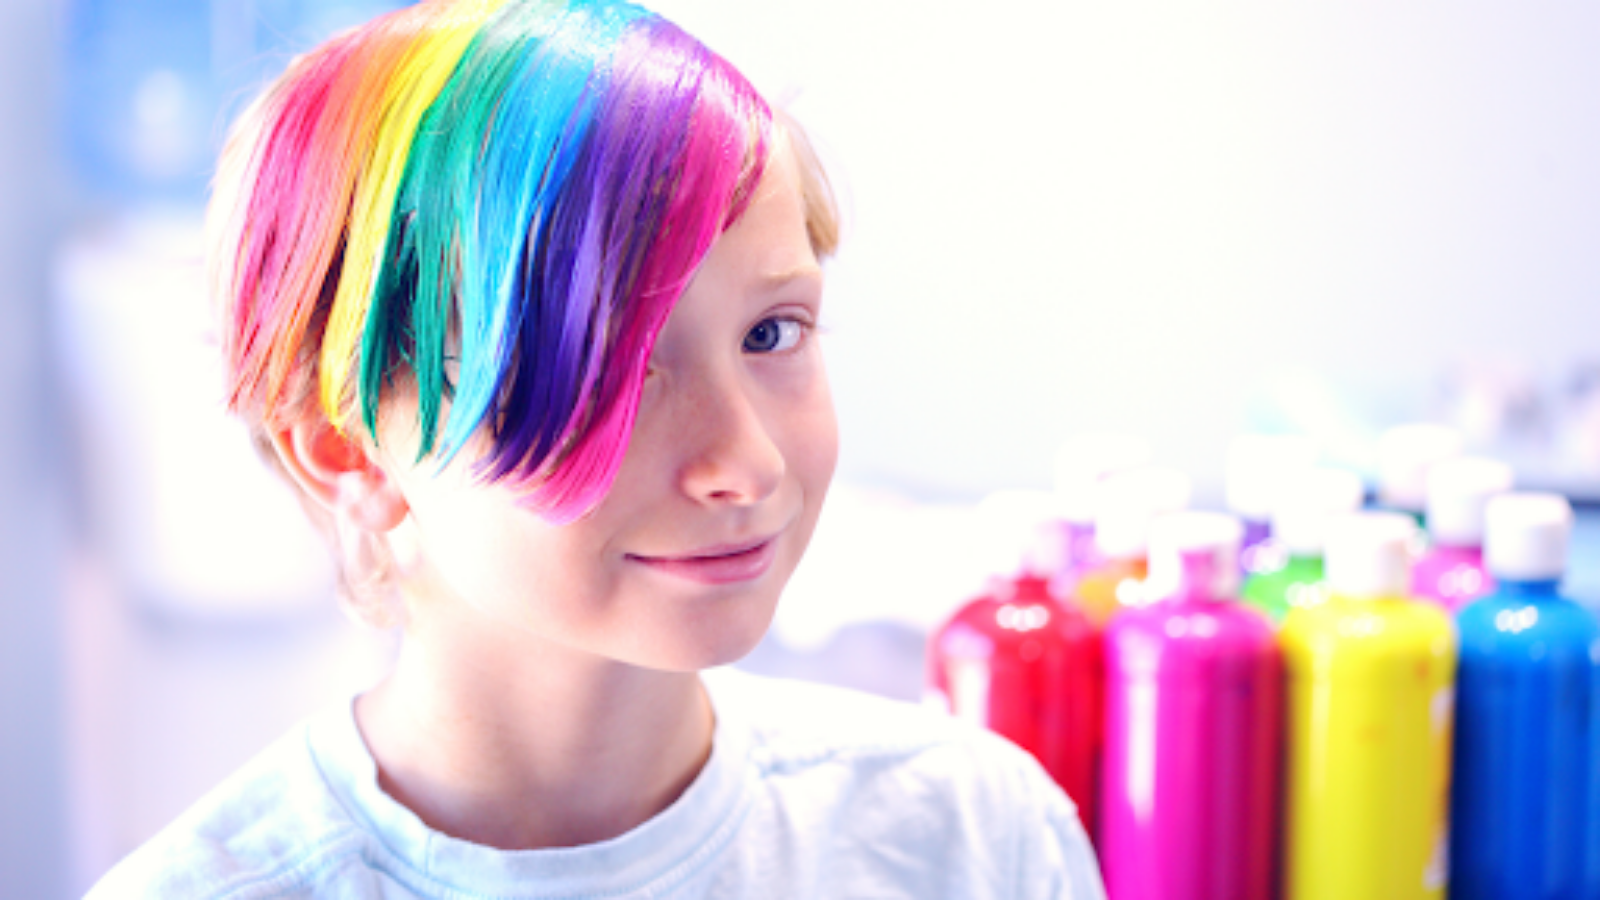 LGBTQ+ Youth with rainbow hair